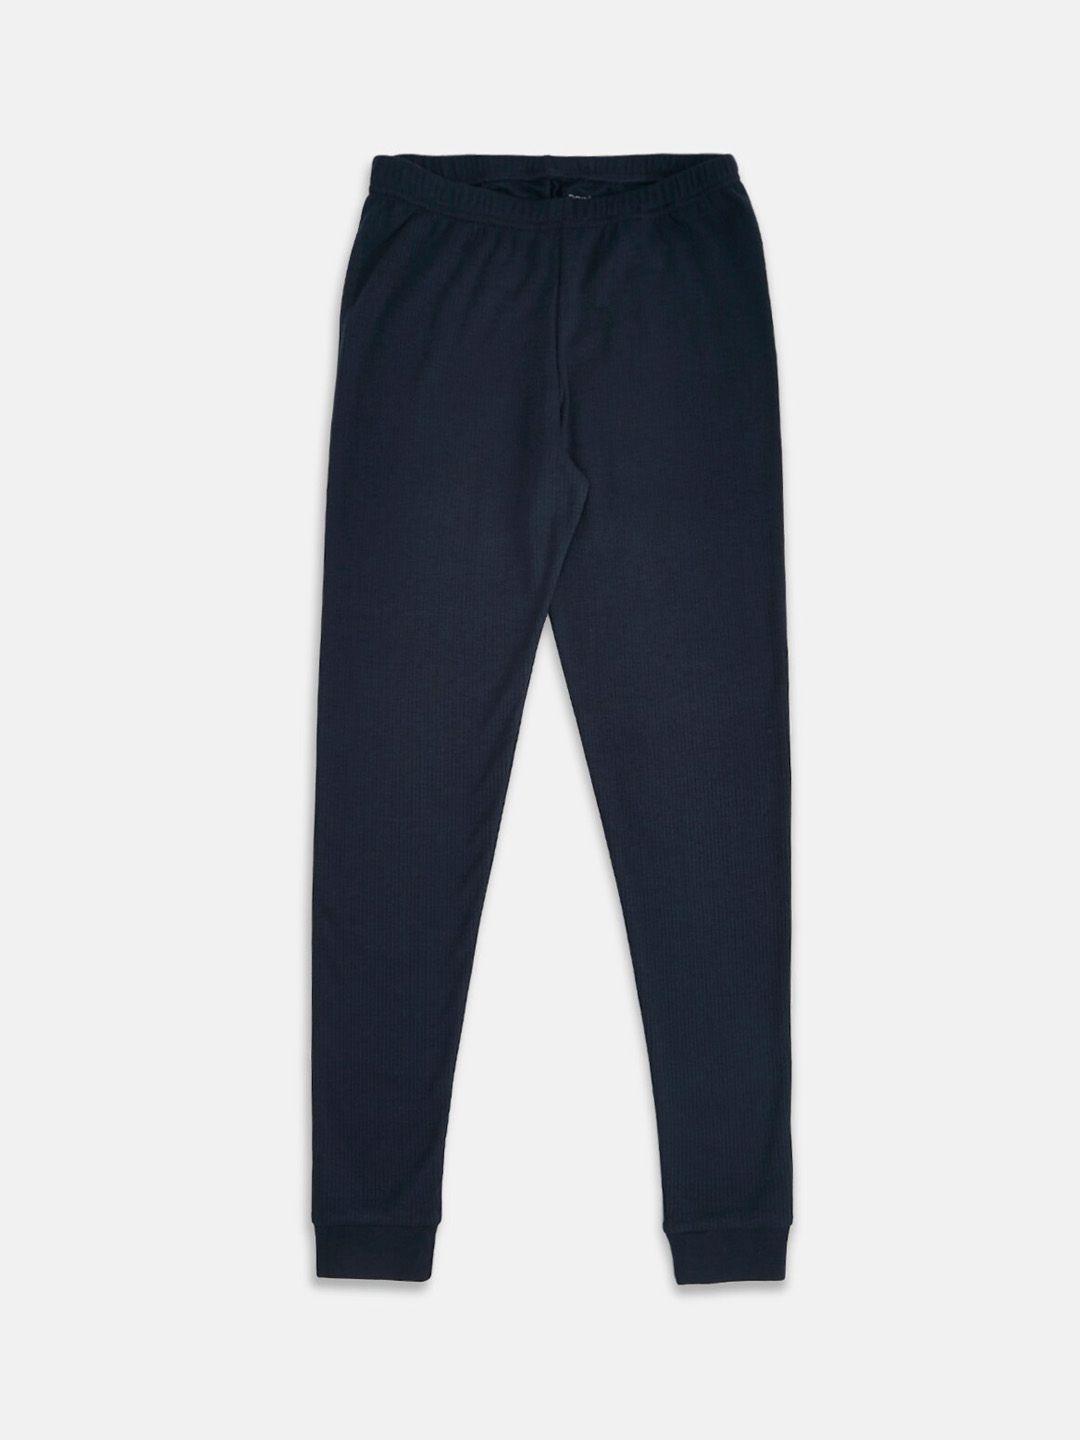 pantaloons-junior-boys-solid-acrylic-thermal-bottoms